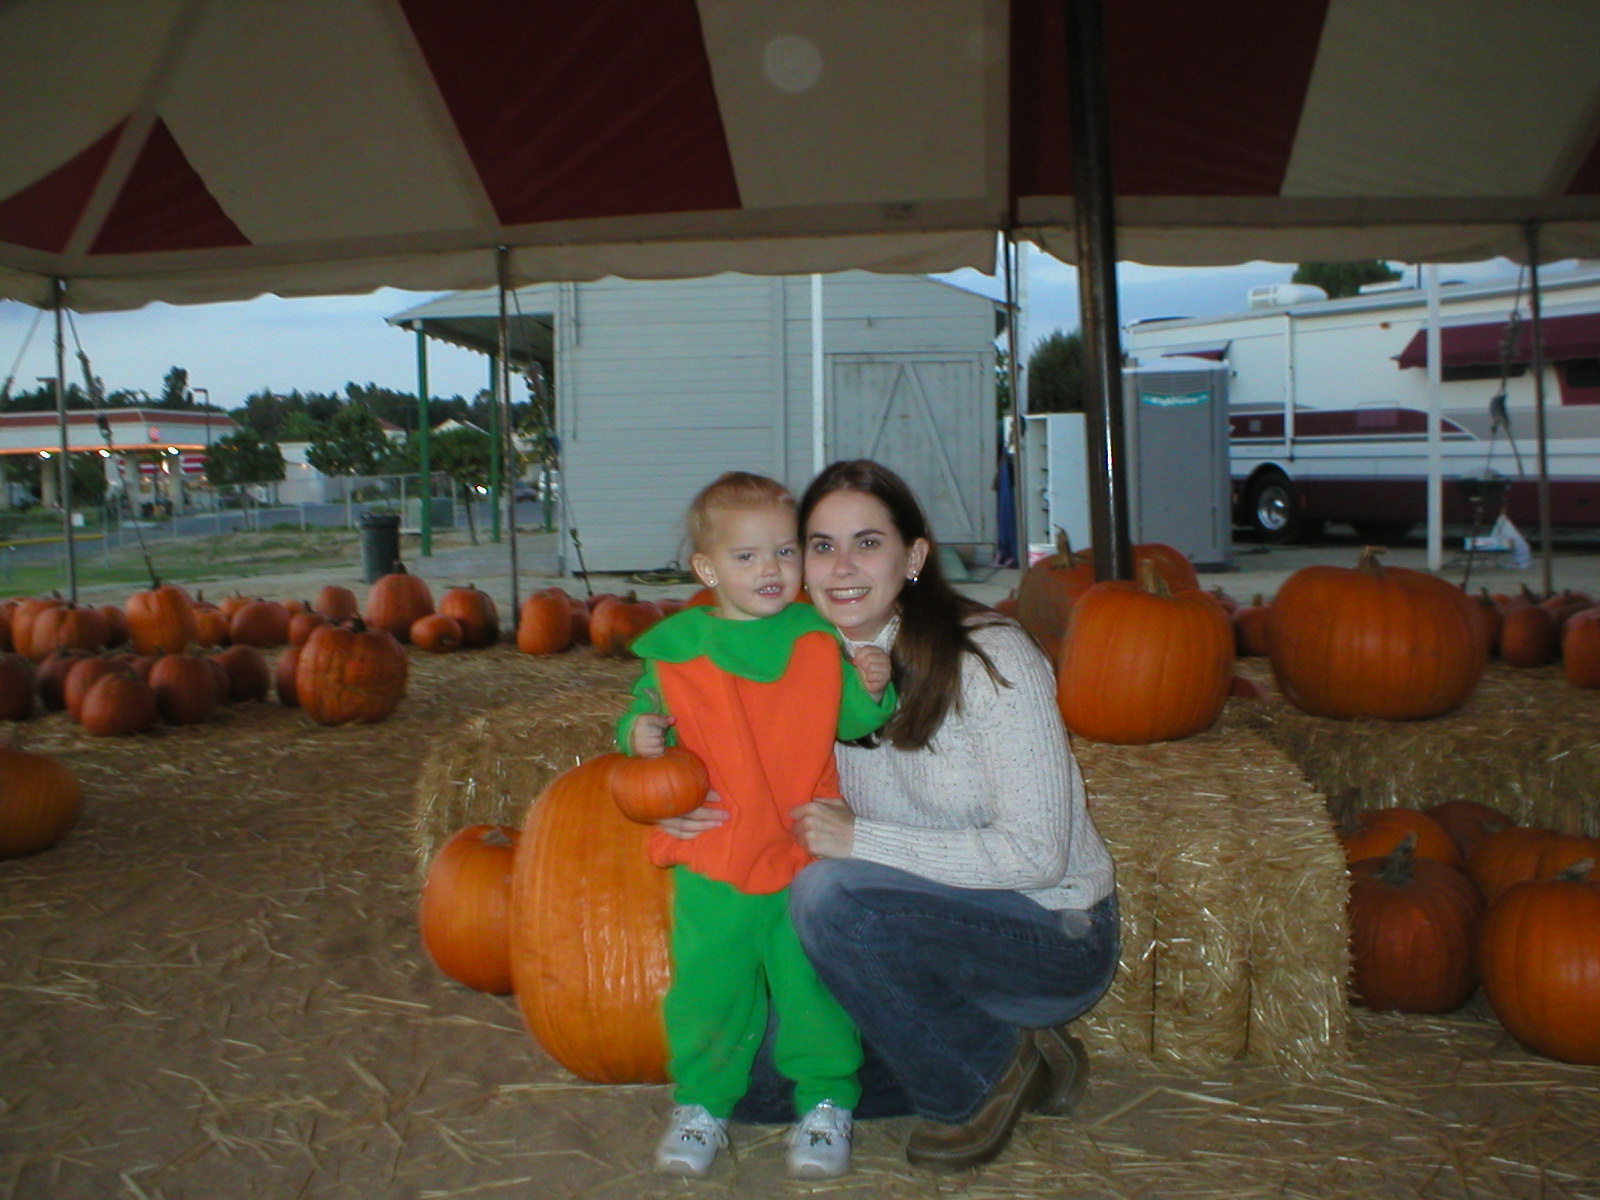 At the "Pumpkin Park" Amy & Kaylin